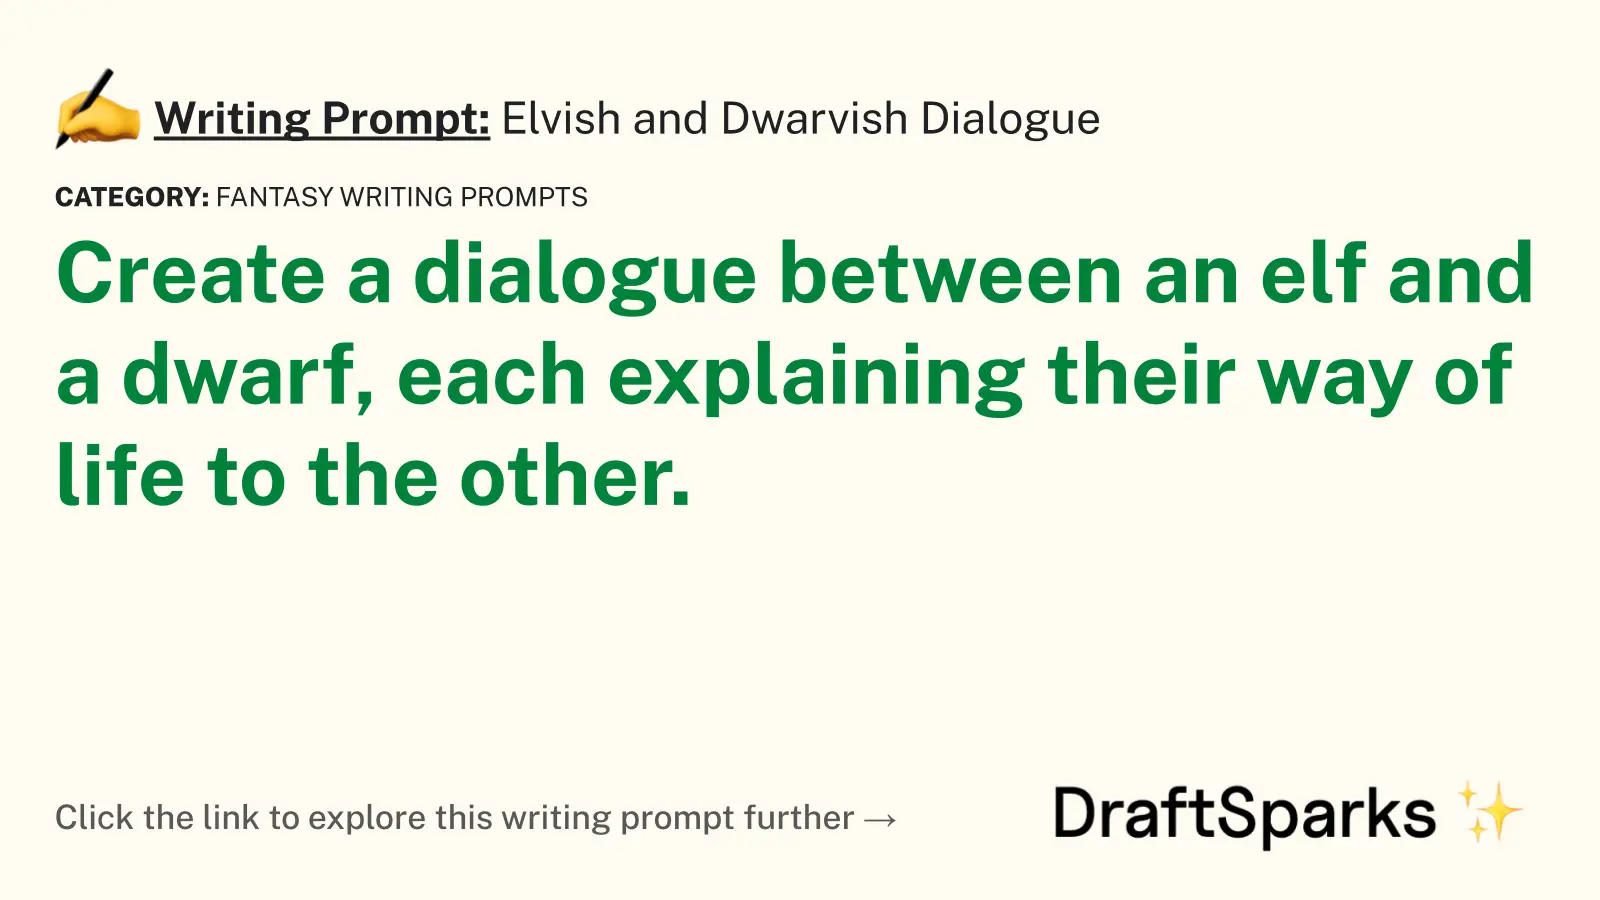 Elvish and Dwarvish Dialogue